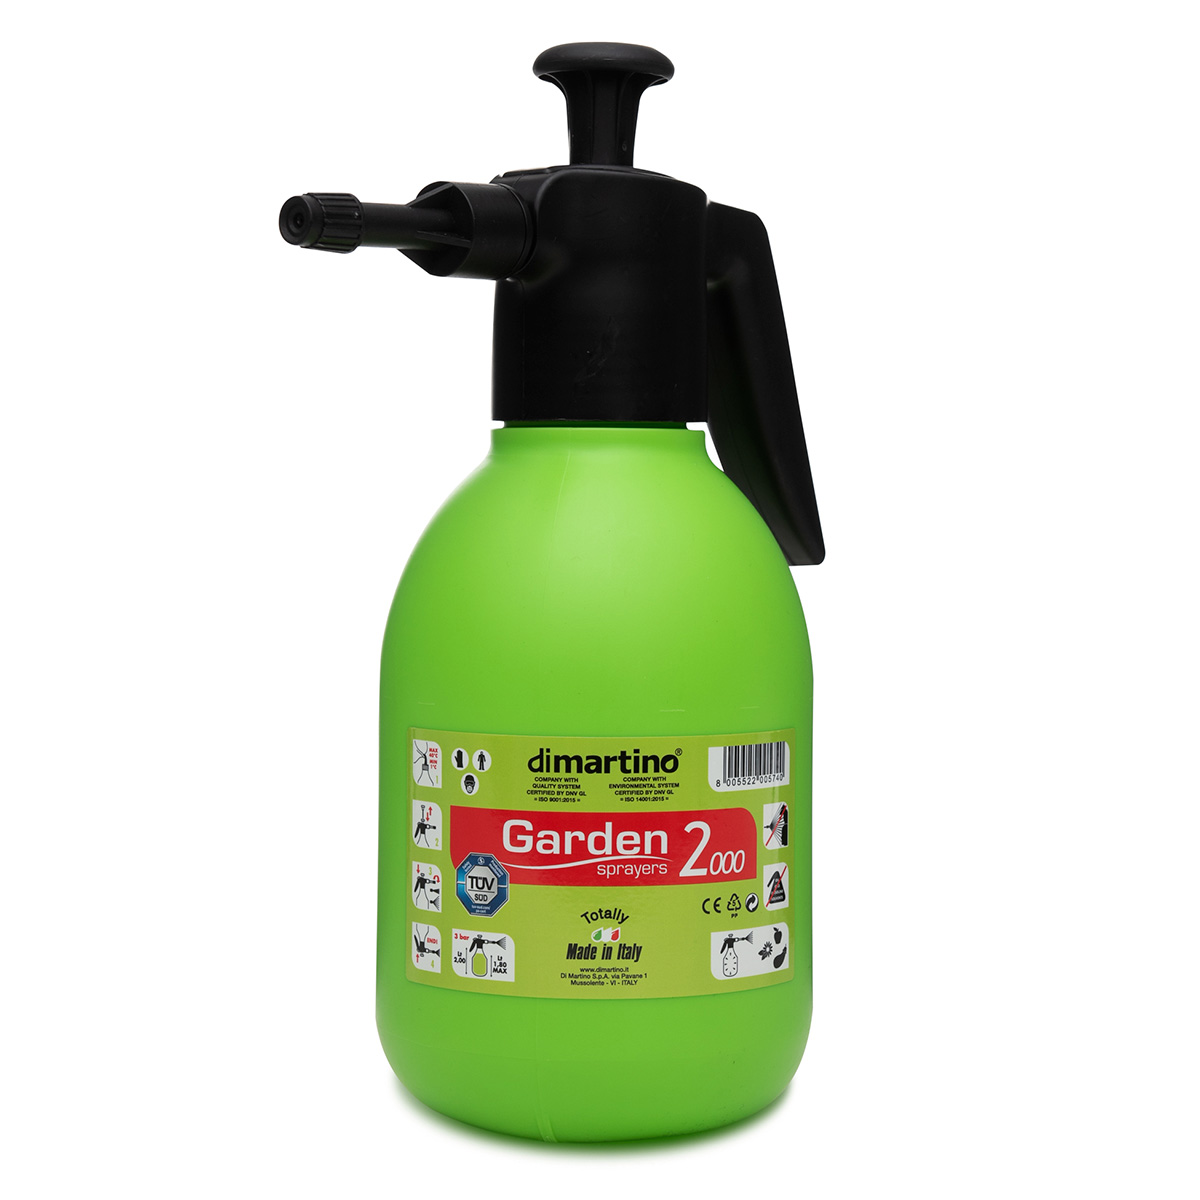 DI MARTINO - Pressure sprayers 1,5-2 lt Garden sprayers | GARDEN 2000